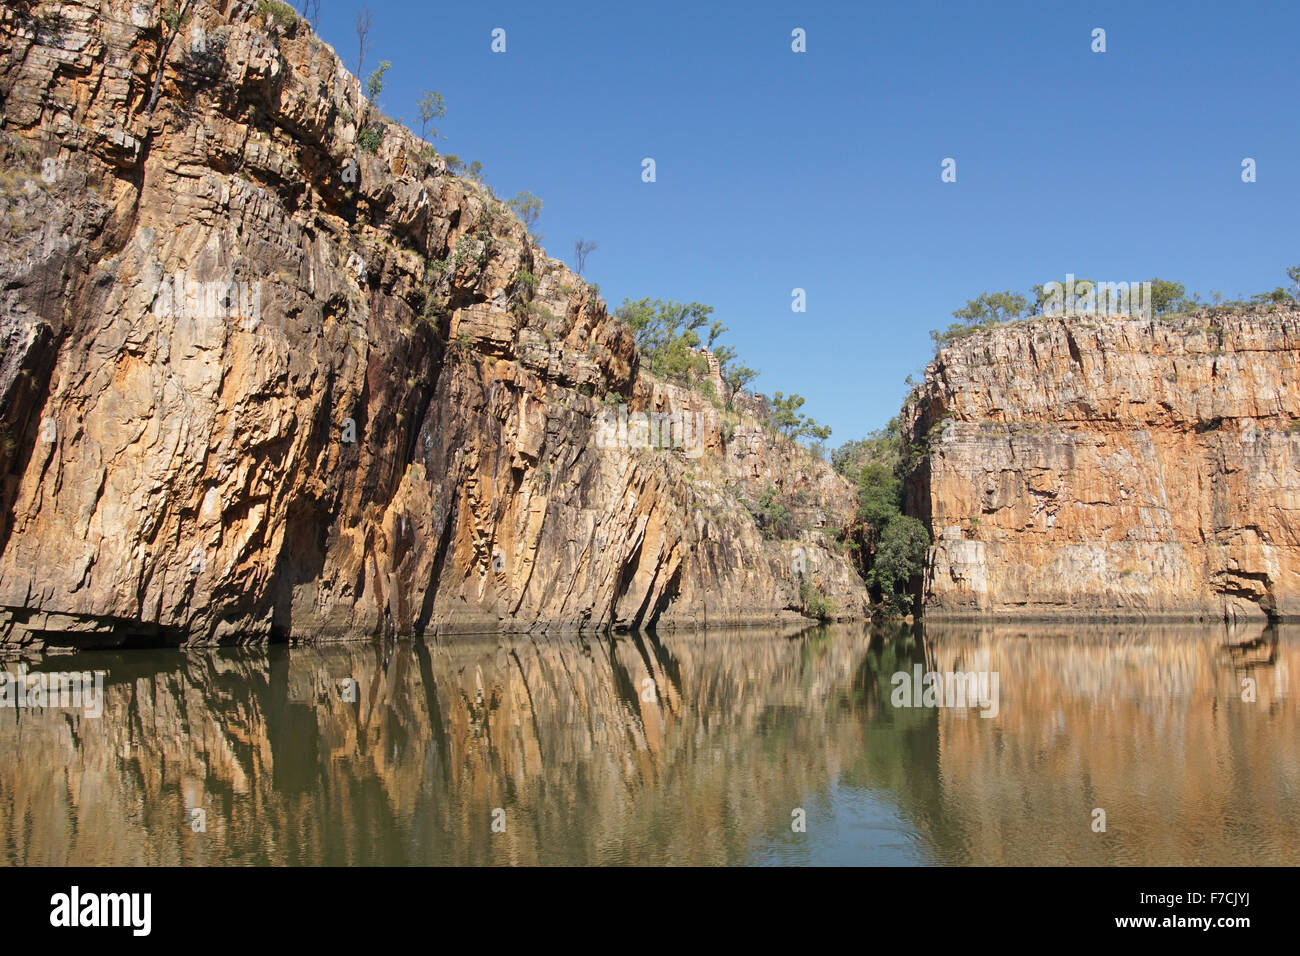 Landscape of the Nitmiluk National Park, Australia Stock Photo